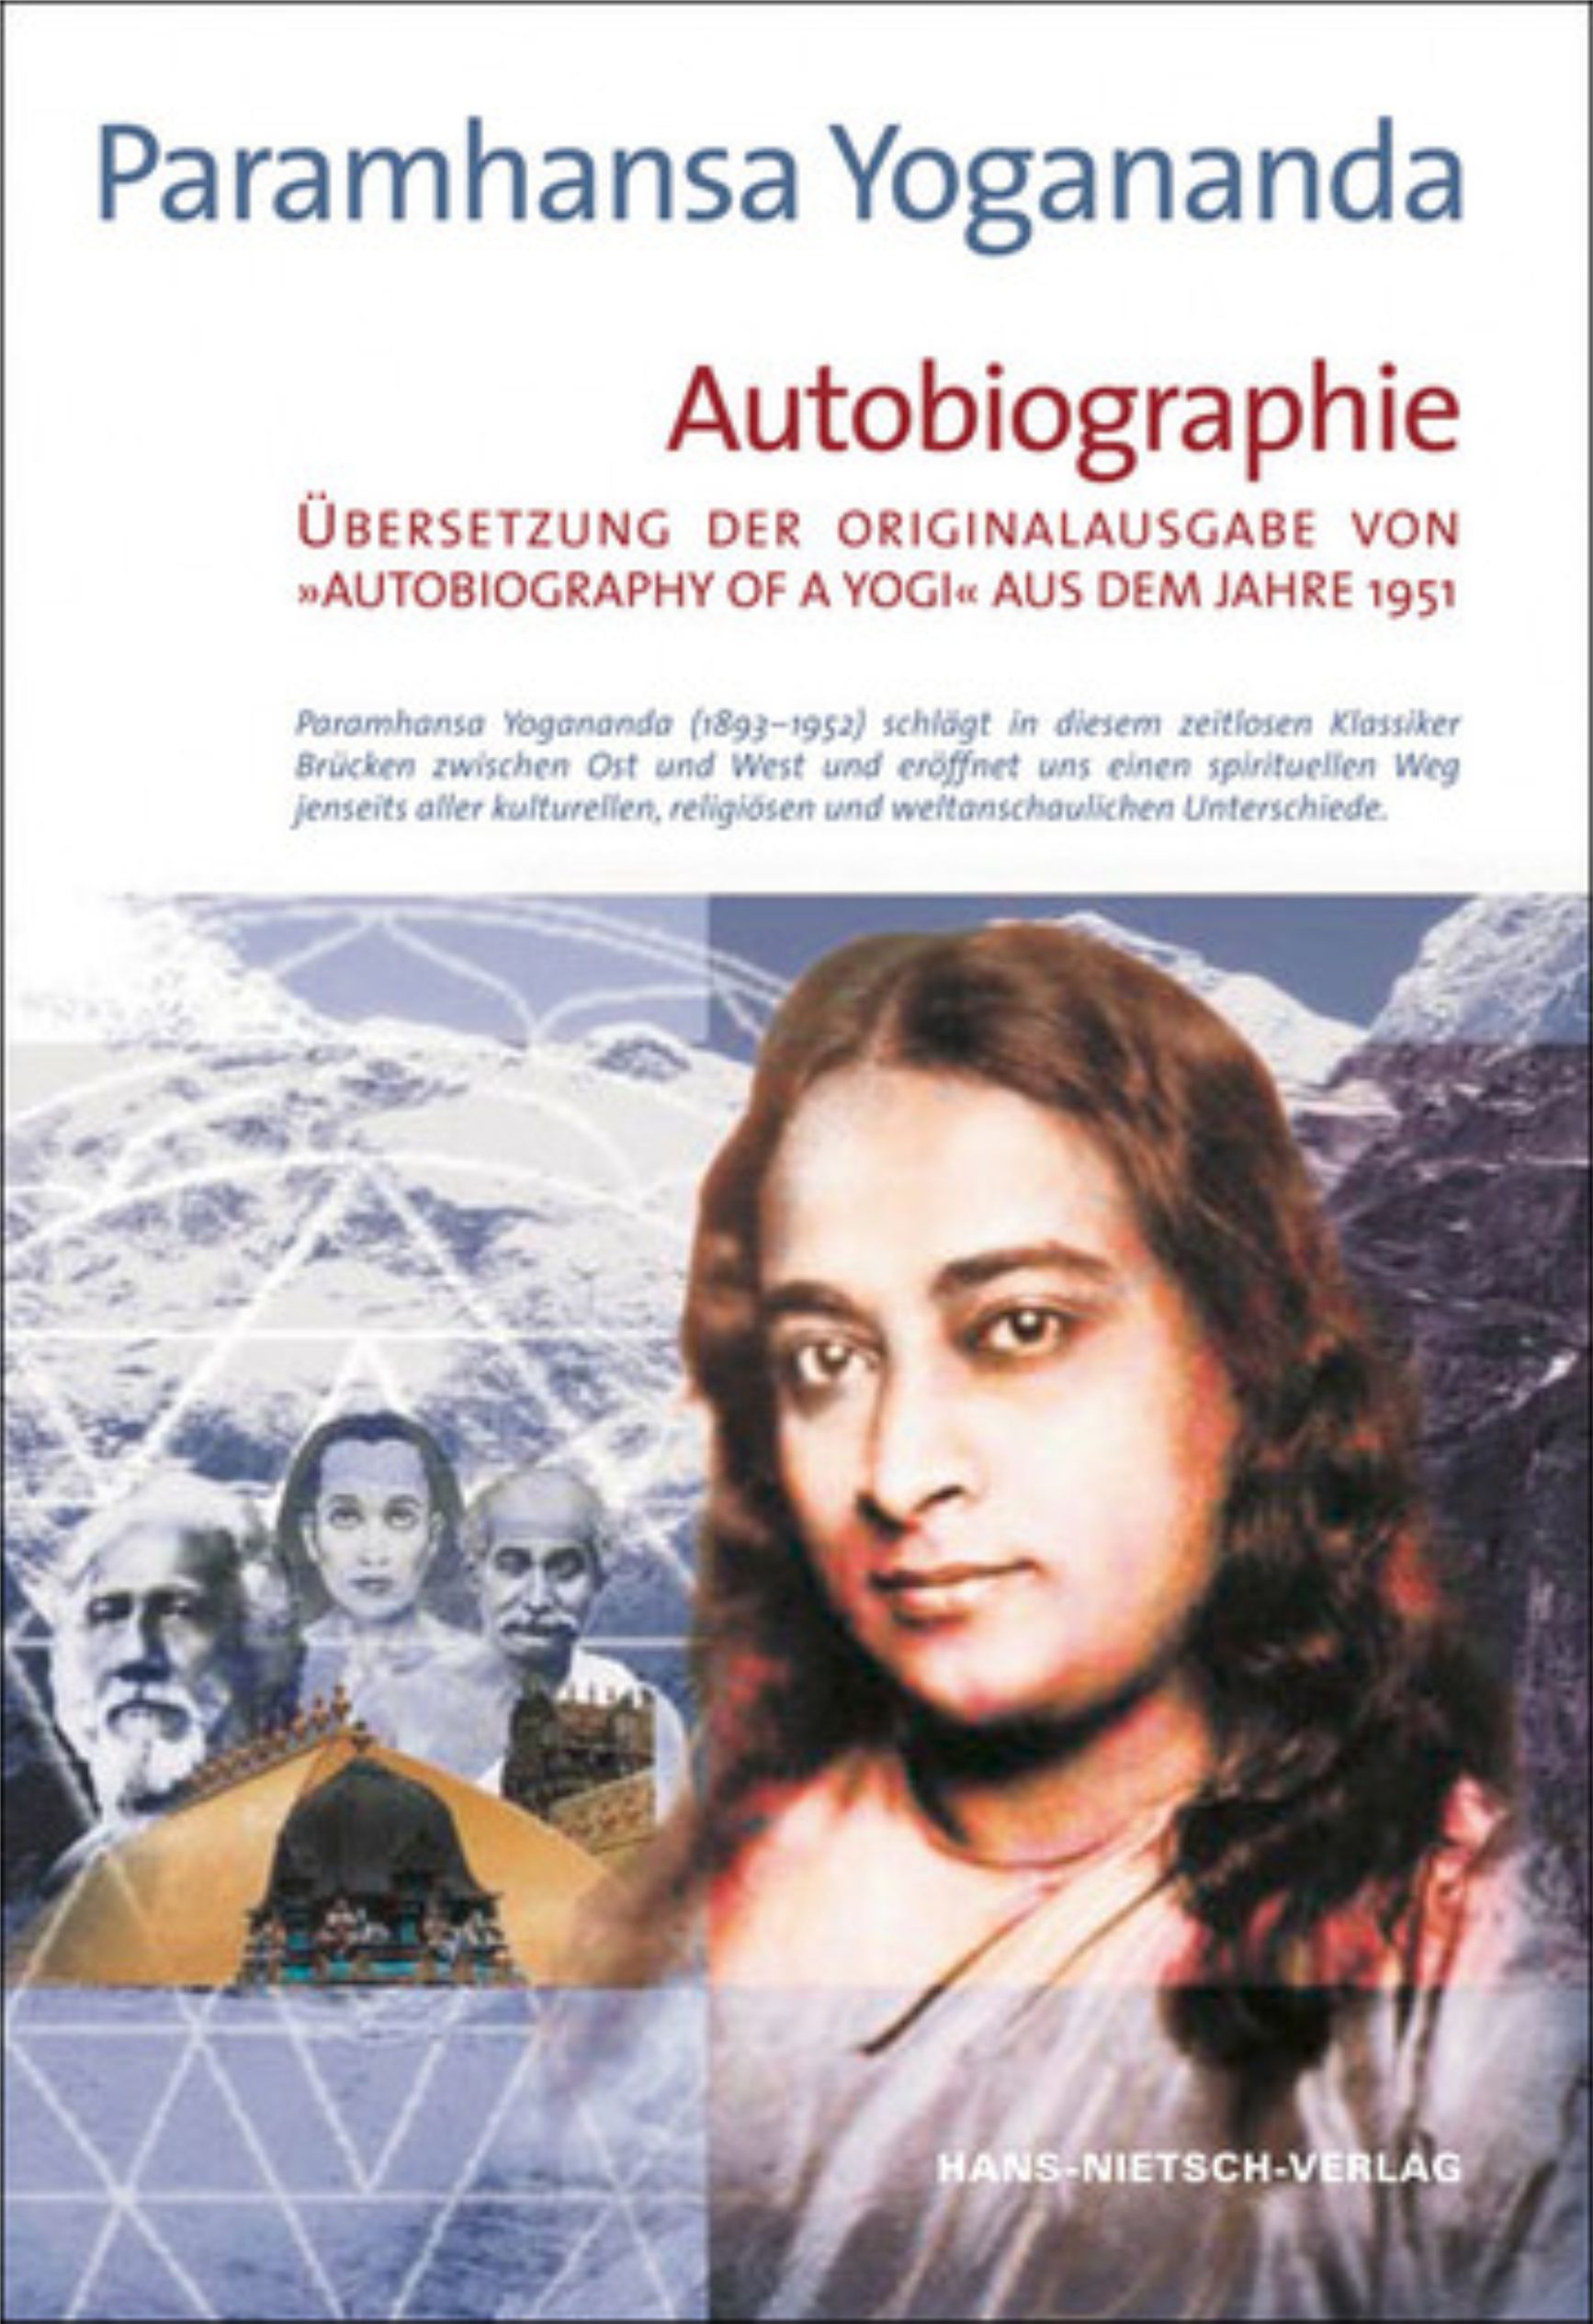 Autobiographie eines Yogi, Paramhansa Yogananda